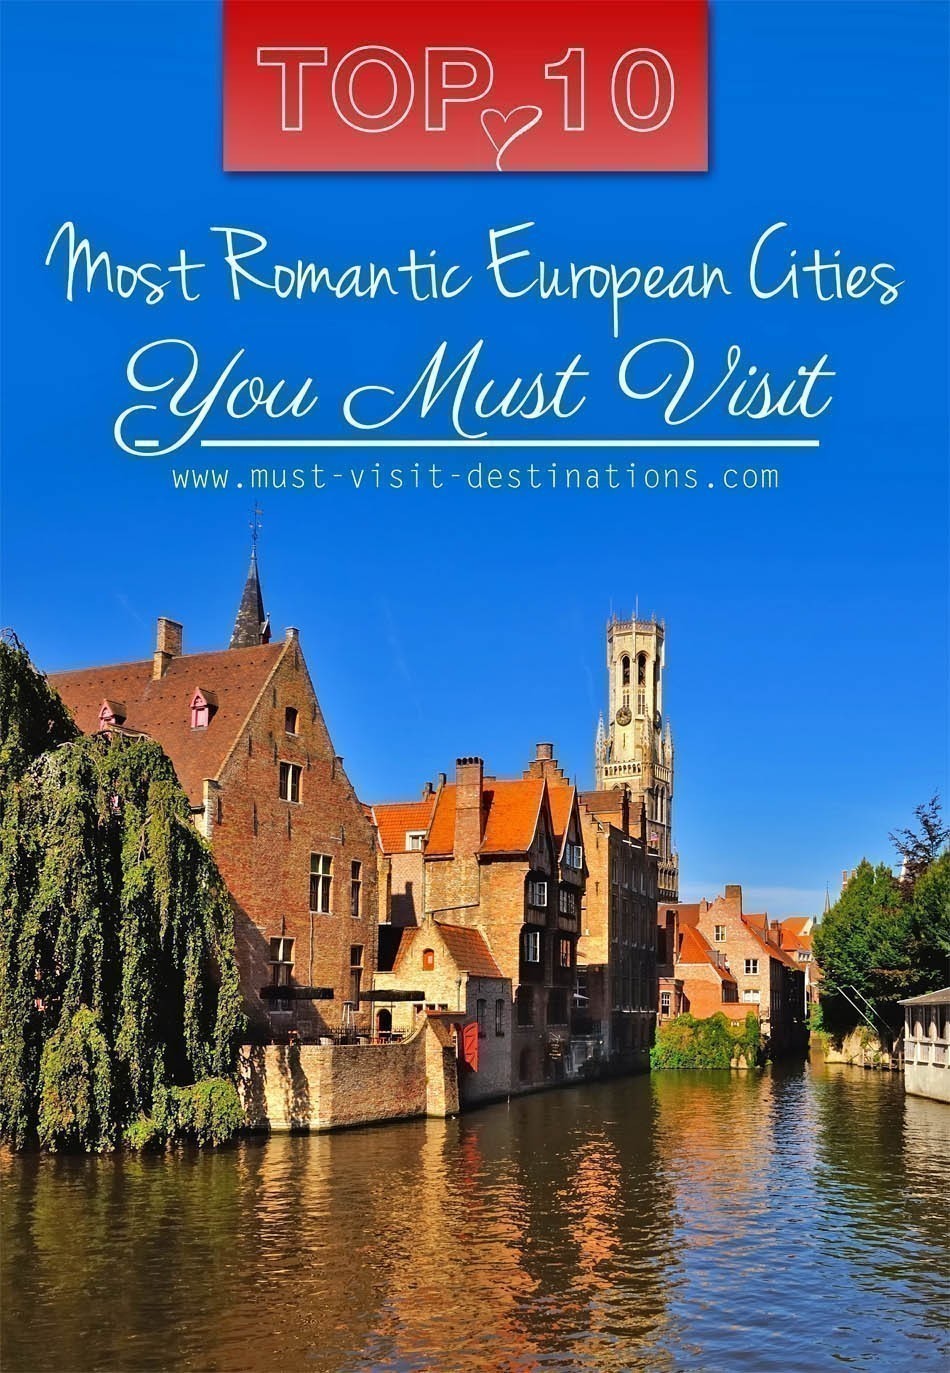 TOP 10 Most Romantic European Cities You Must Visit #romantic #travel